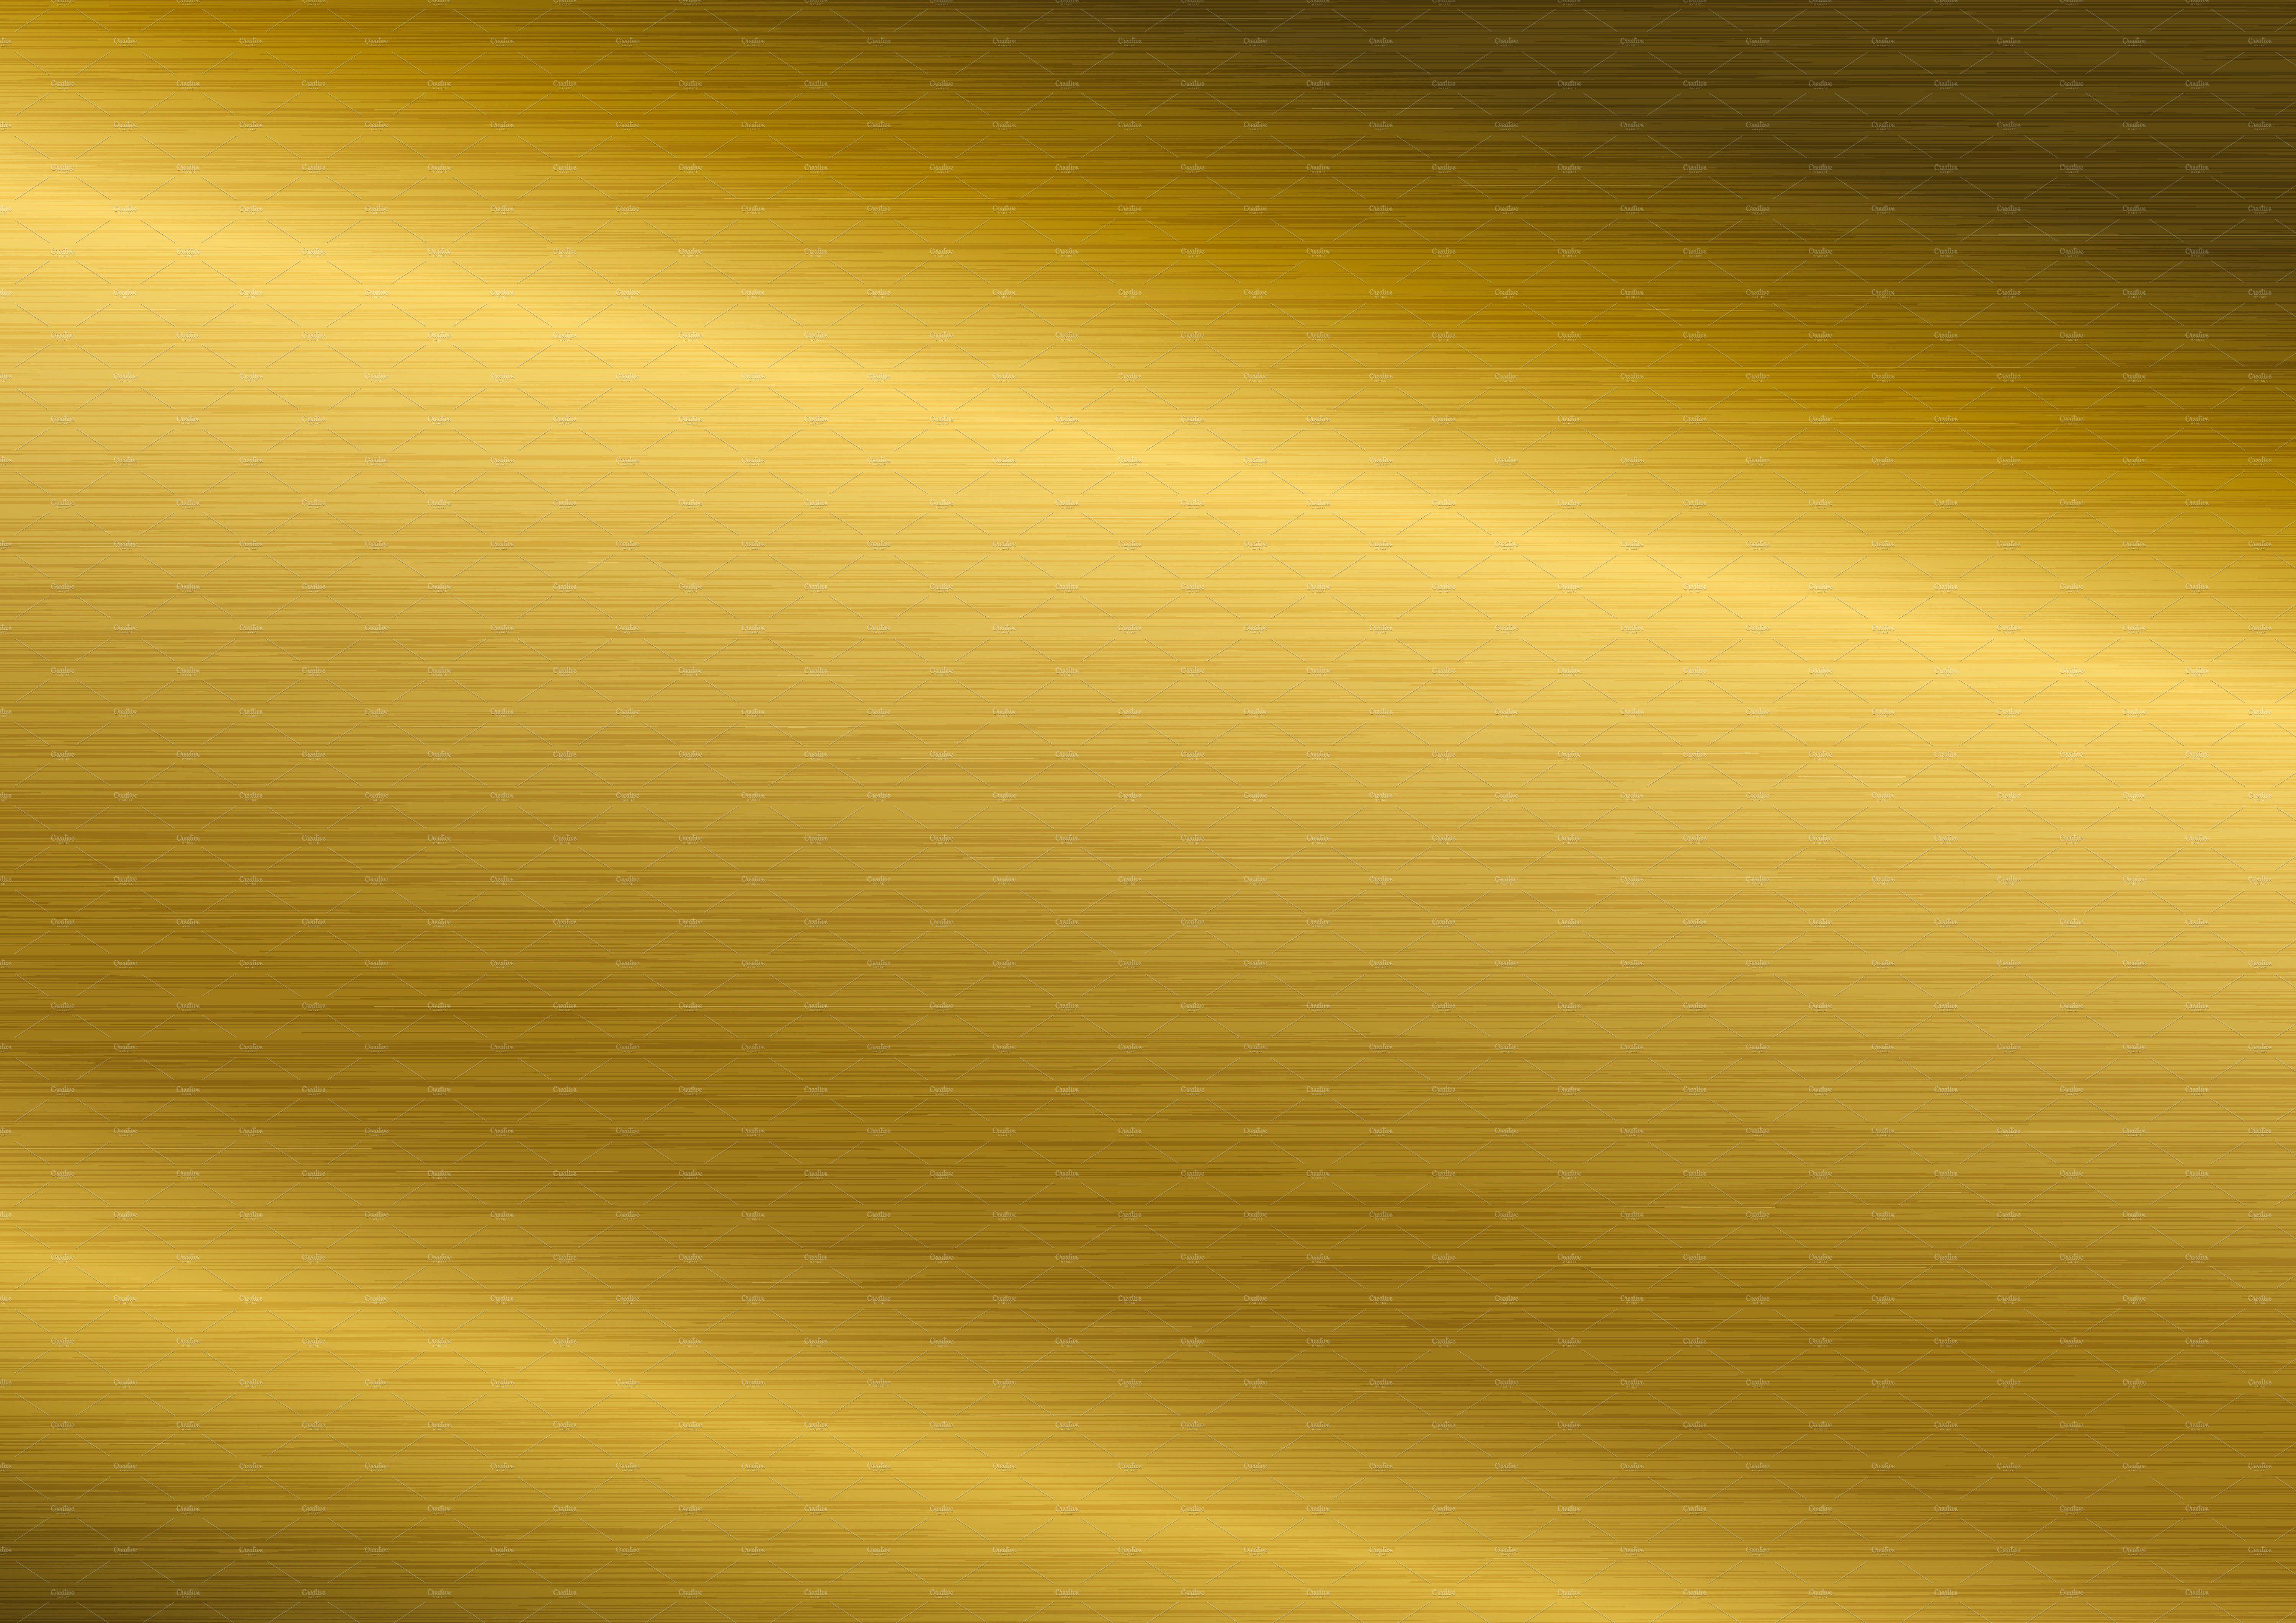 metallic gold background